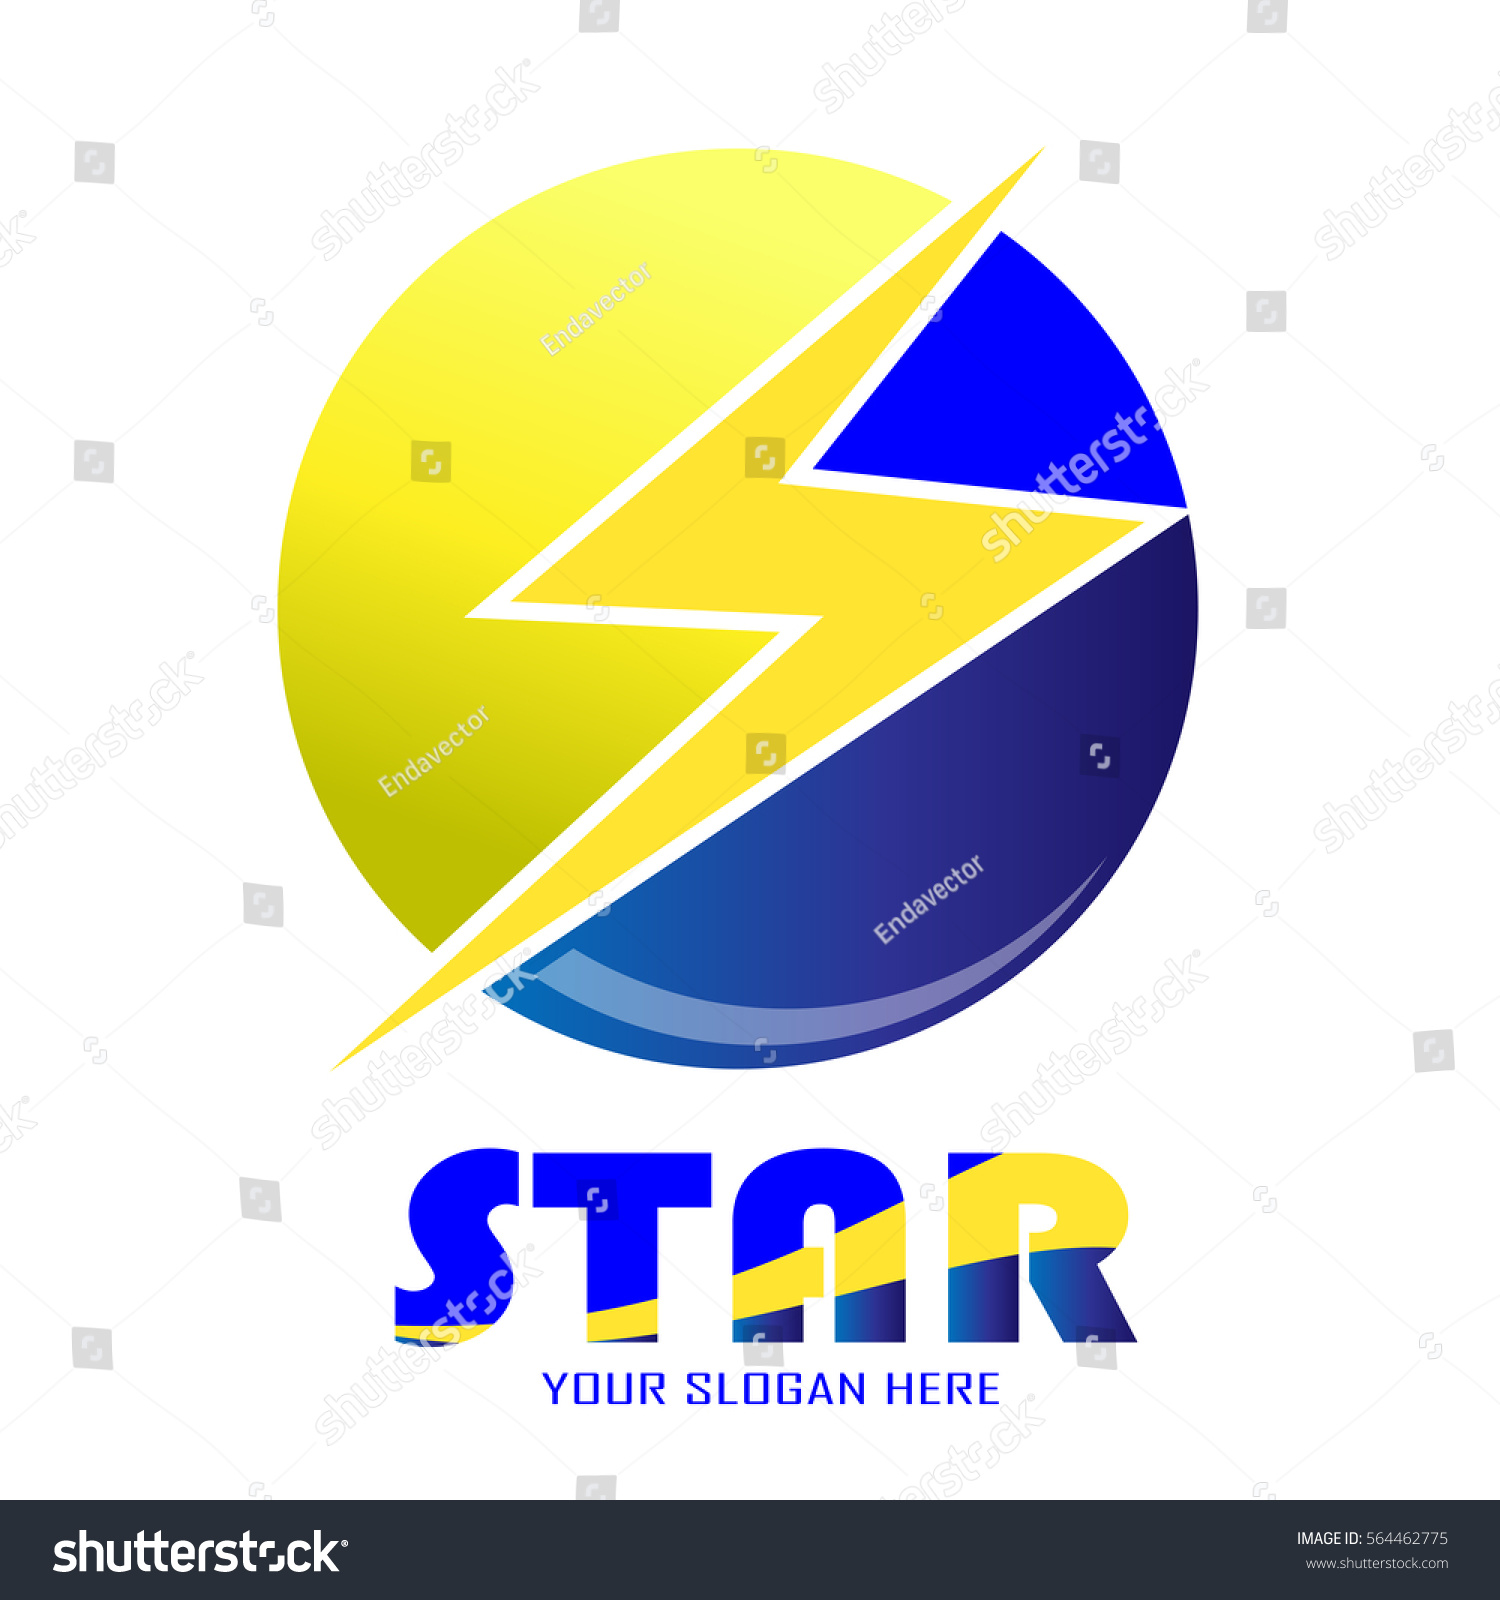 Download Free Star In Circle Logos PSD Mockup Template